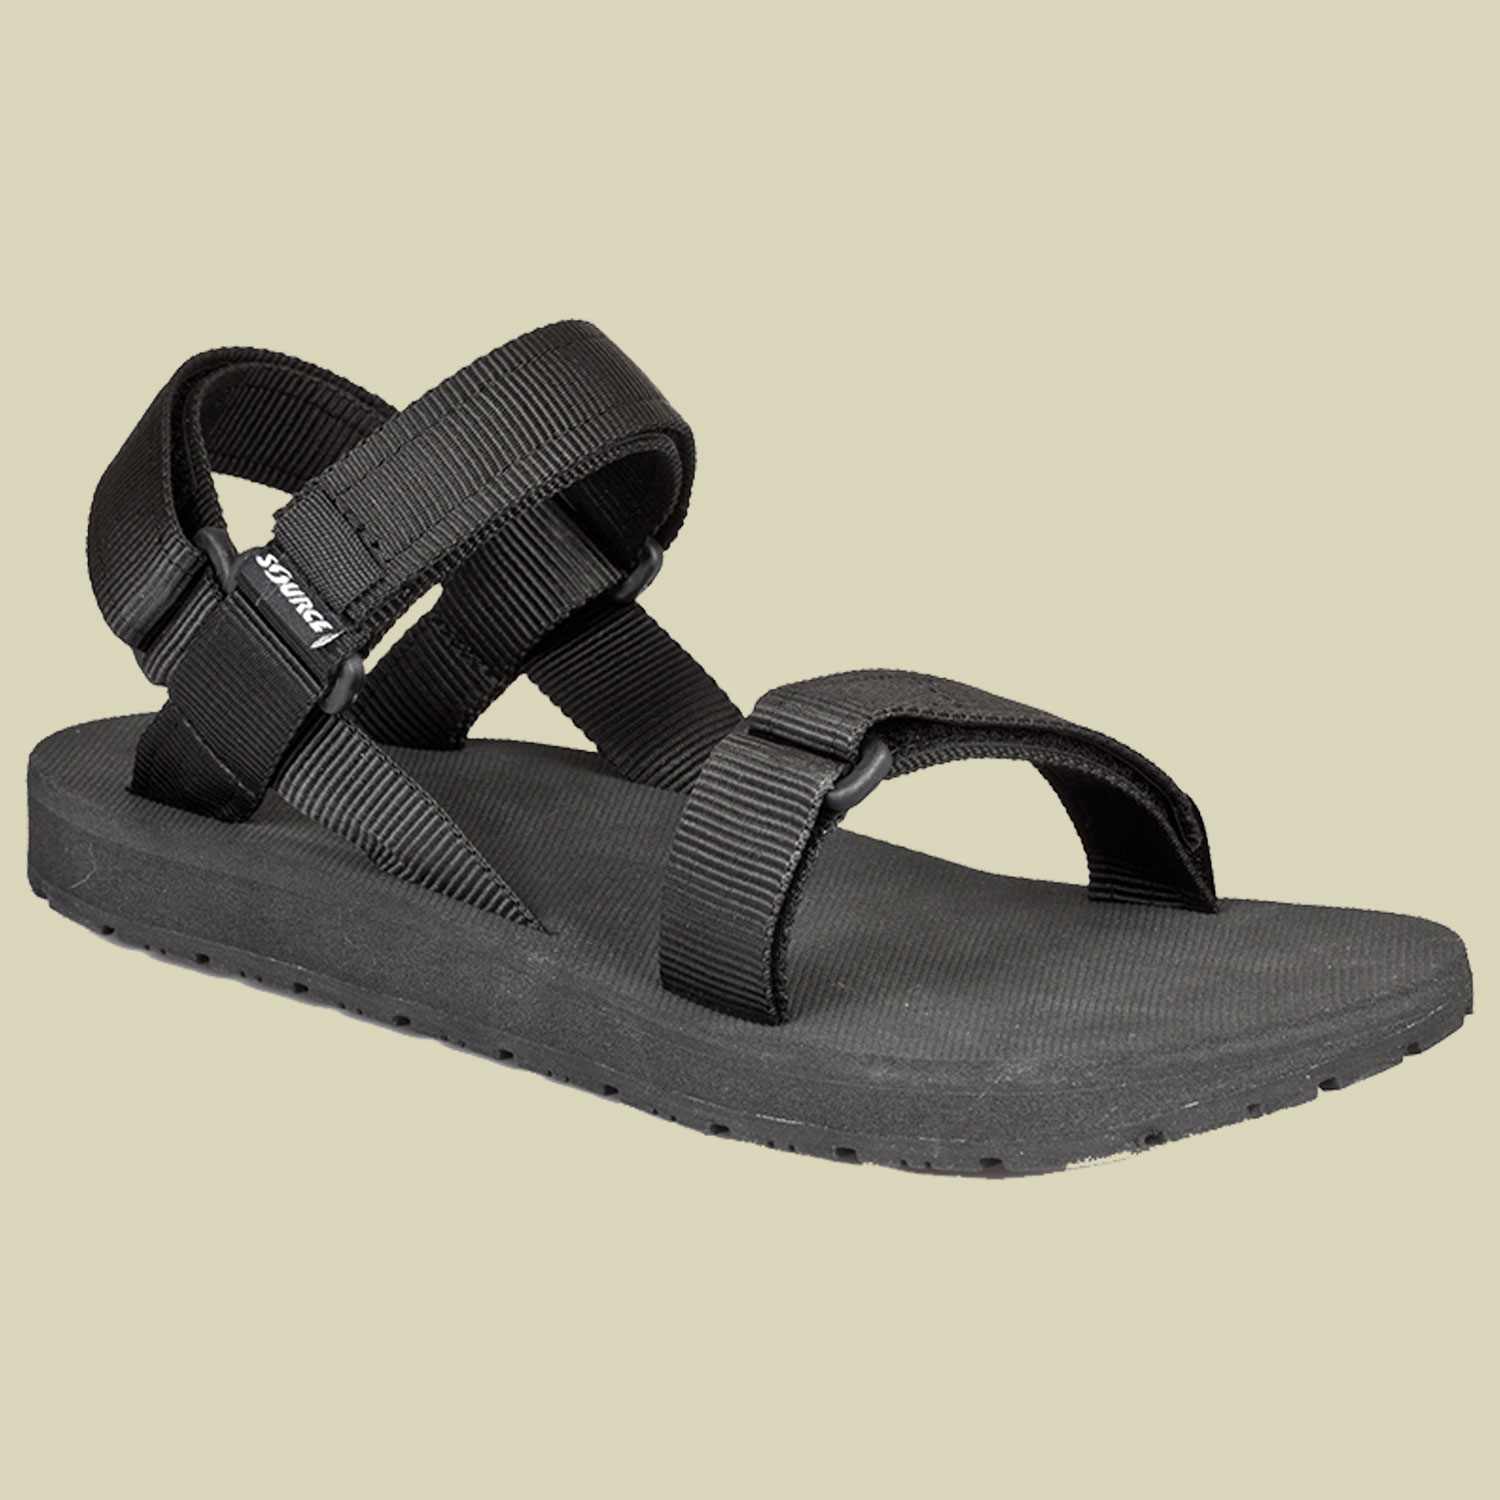 Classic Sandale Men Größe 47 Farbe black